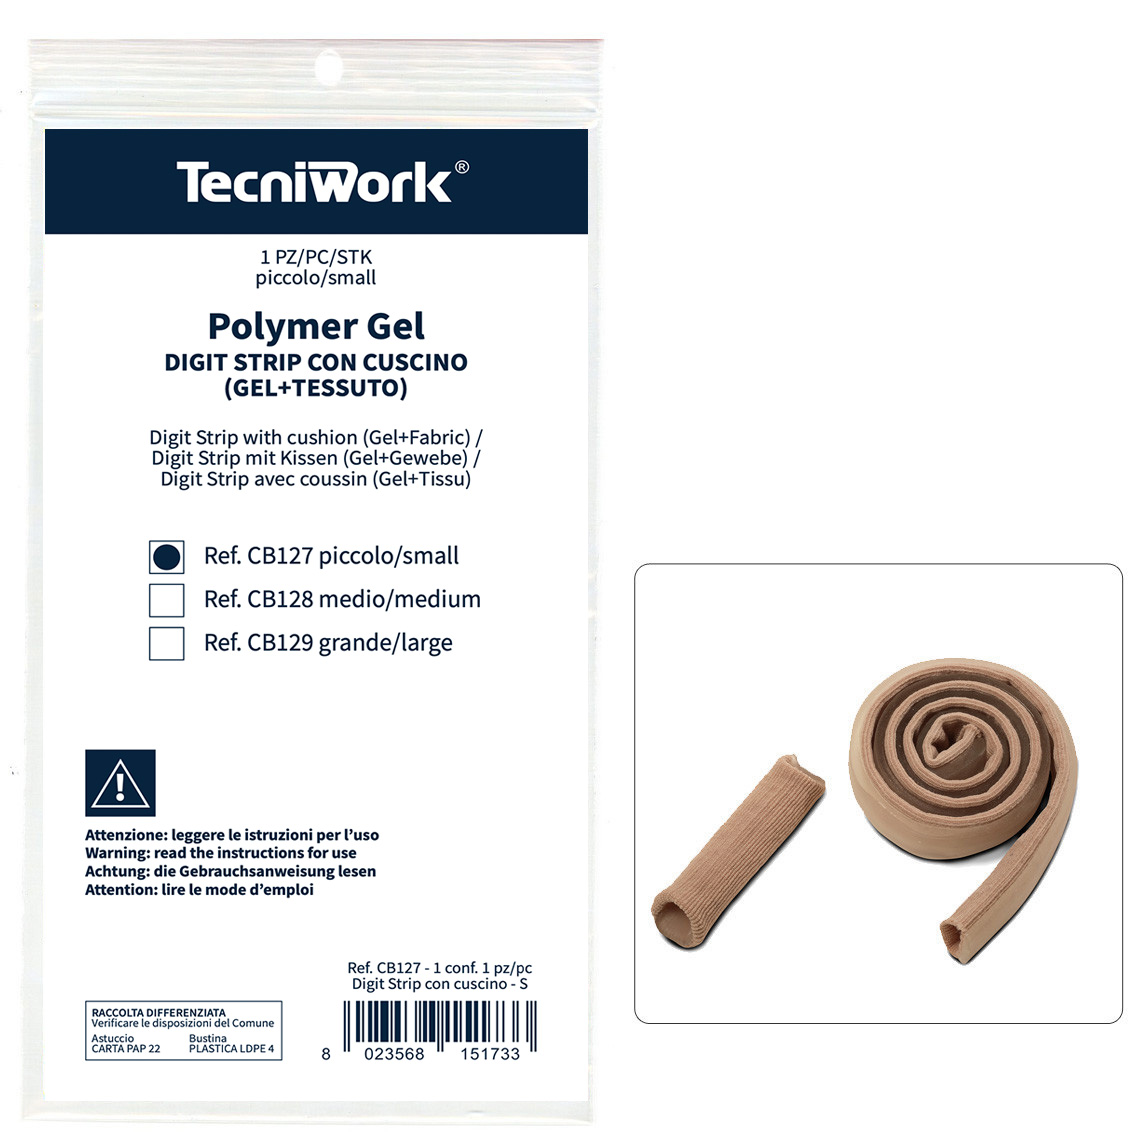 Digit Strip - Protection pour orteils en tissu et coussinet central en Tecniwork Polymer Gel